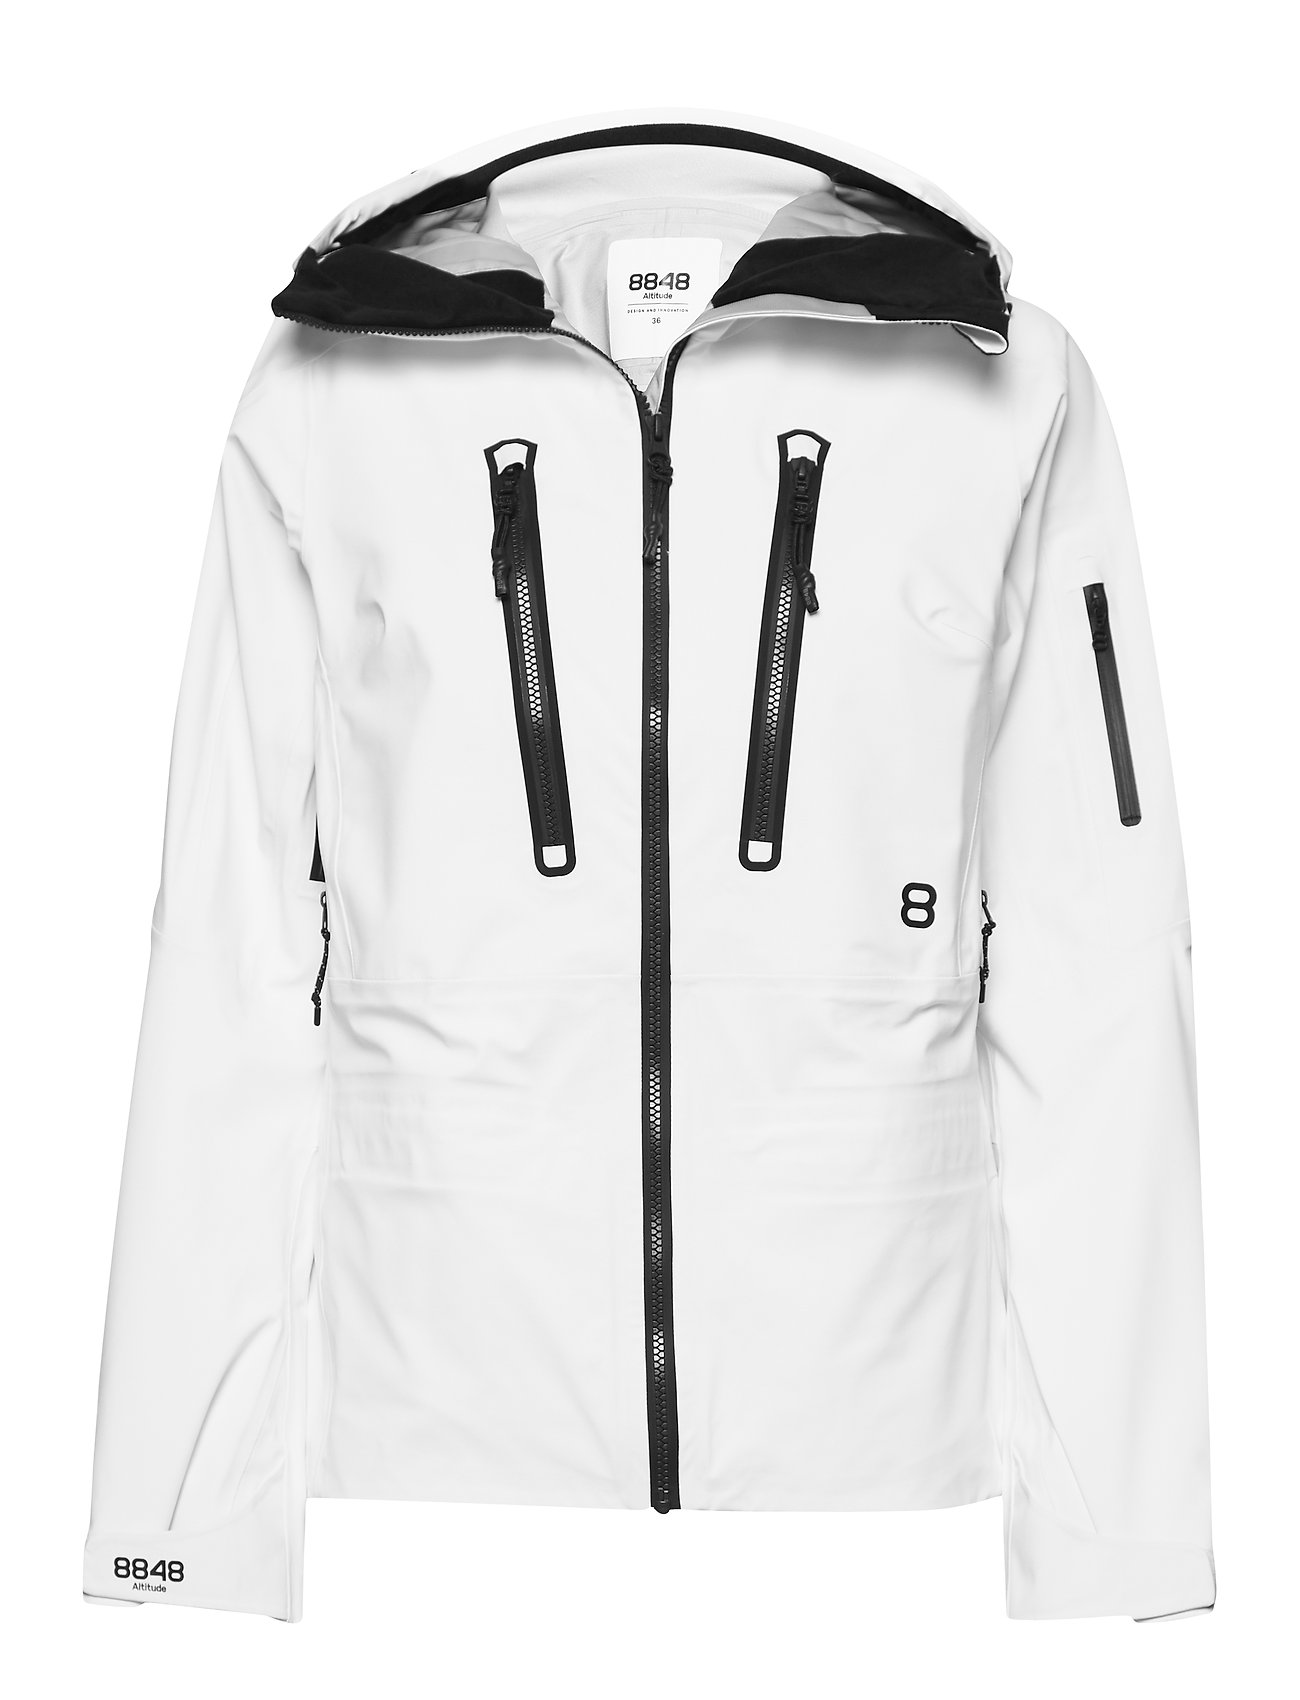 8848 Altitude jakker – Pow W Jacket Outerwear Sport Jackets Hvid 8848 Altitude til dame Sort - Pashion.dk